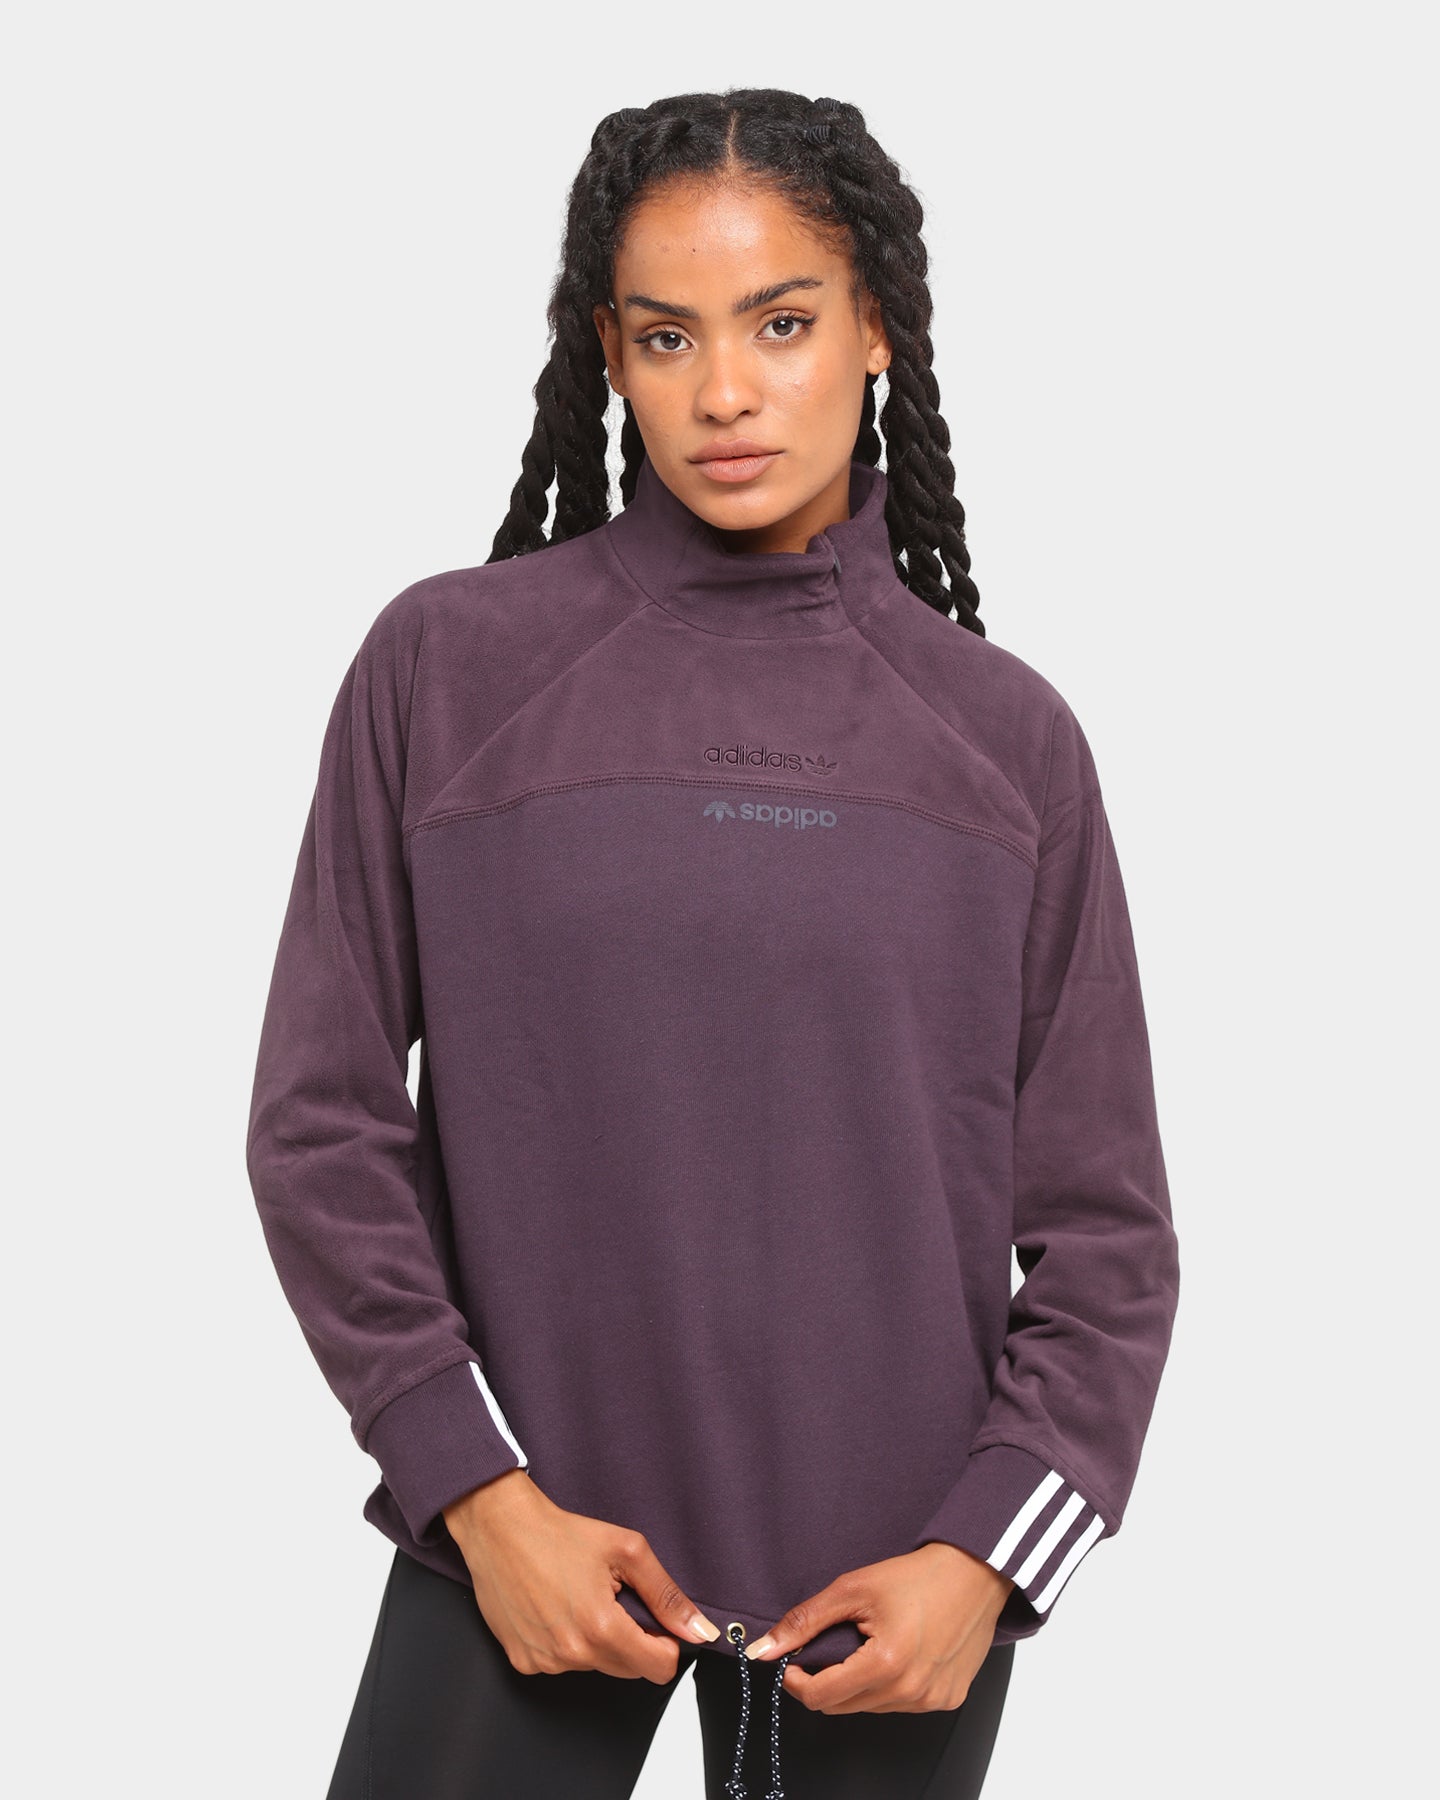 adidas sweatshirt purple